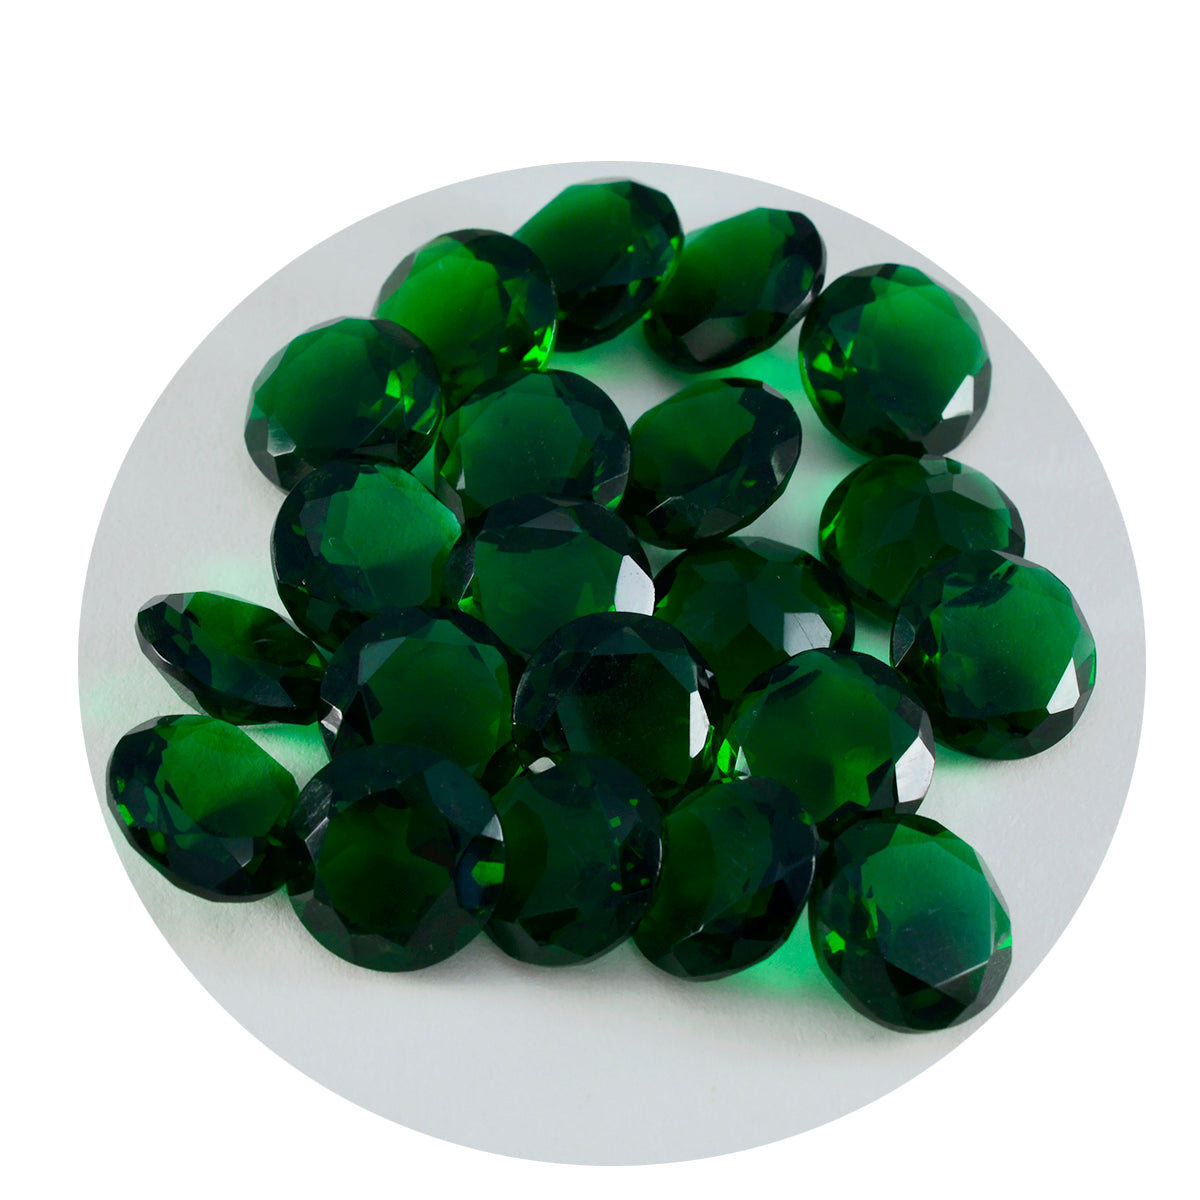 Riyogems 1PC Green Emerald CZ Faceted 9x9 mm Round Shape A+ Quality Loose Gems